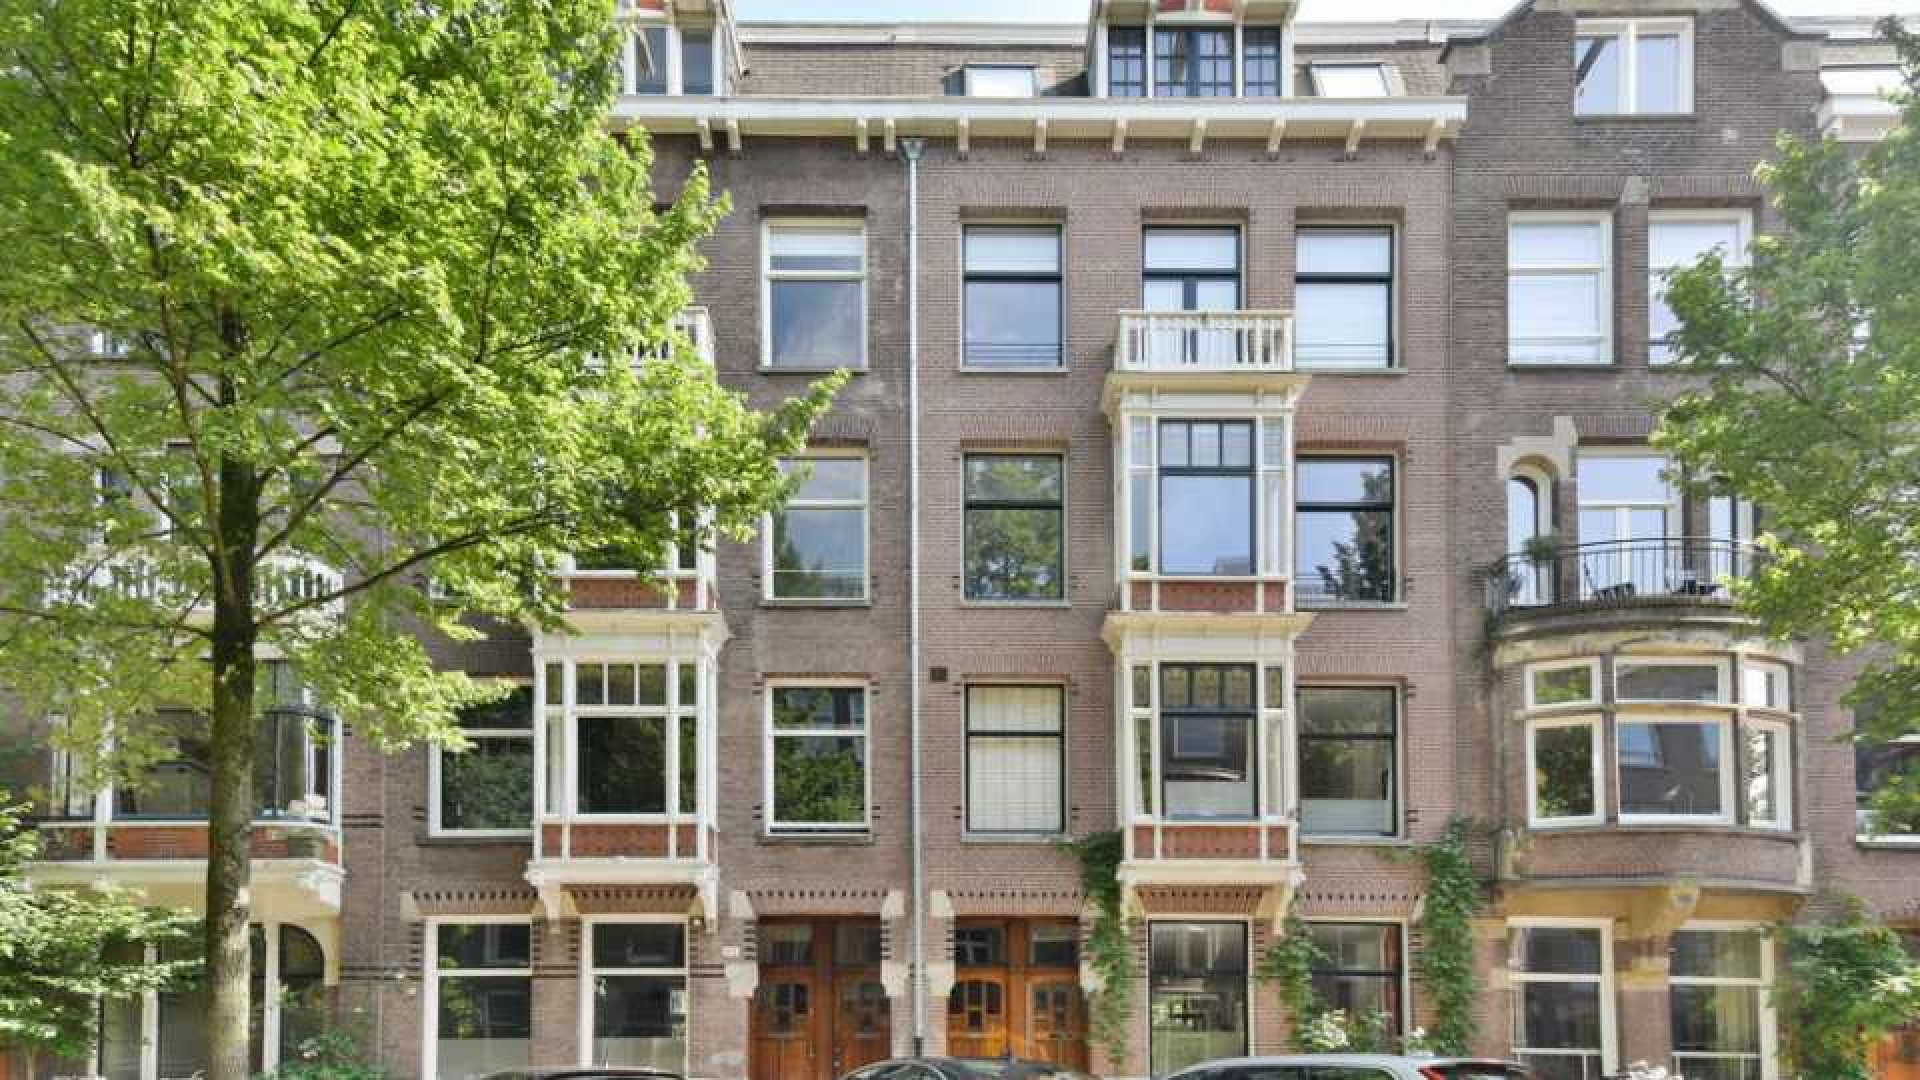 Binnenkijken in Amsterdams miljoenenpand van Ajax speler Klaas Jan Huntelaar. 1